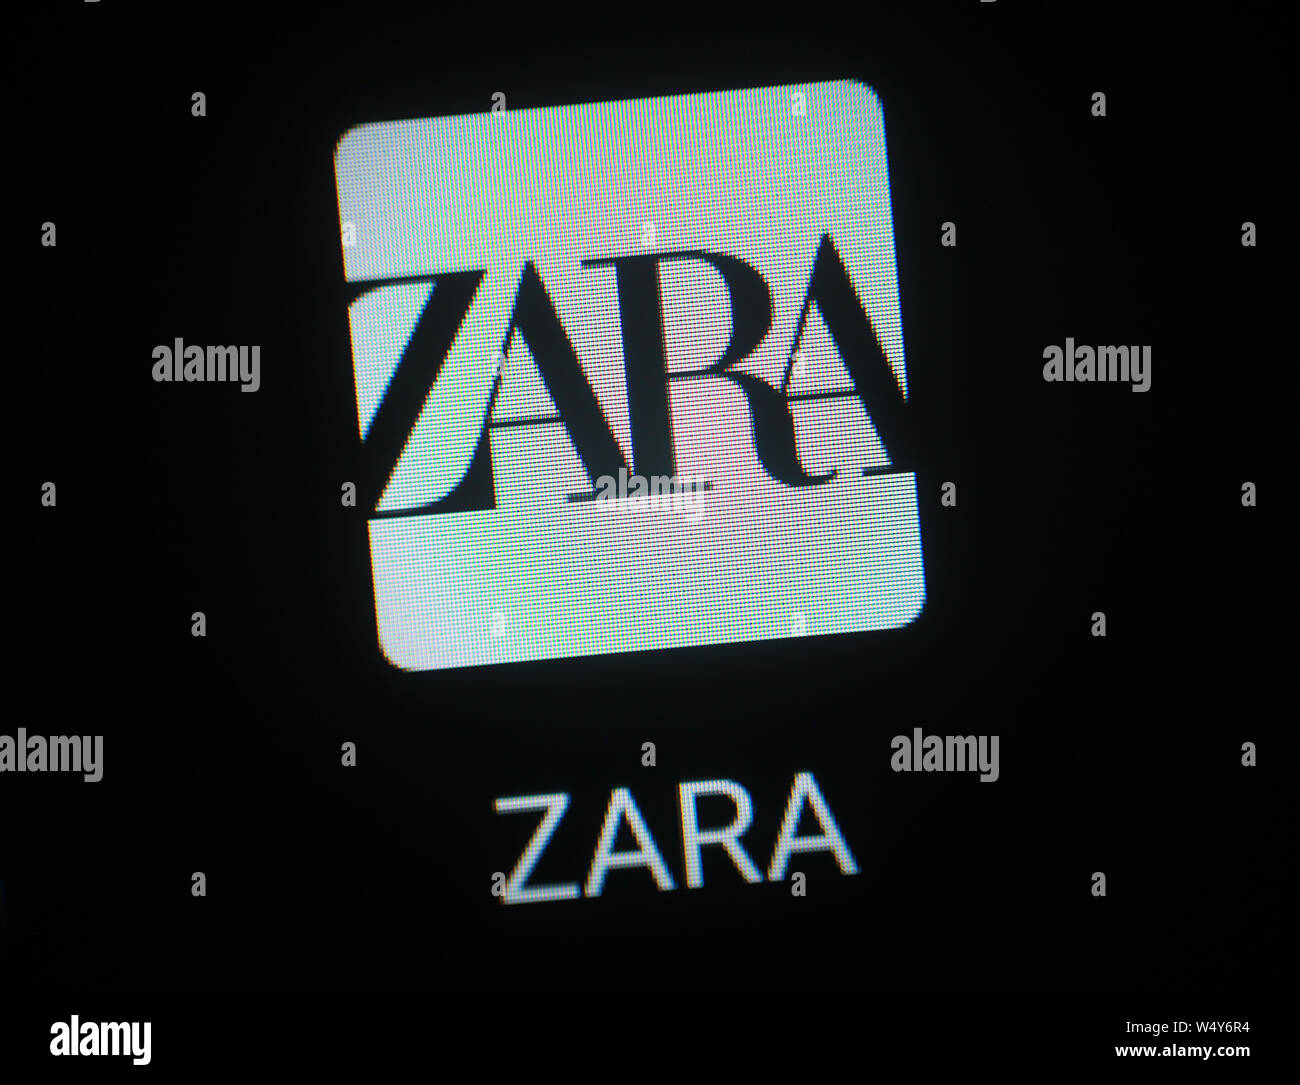 ZARA company application icon on computer display Stock Photo - Alamy